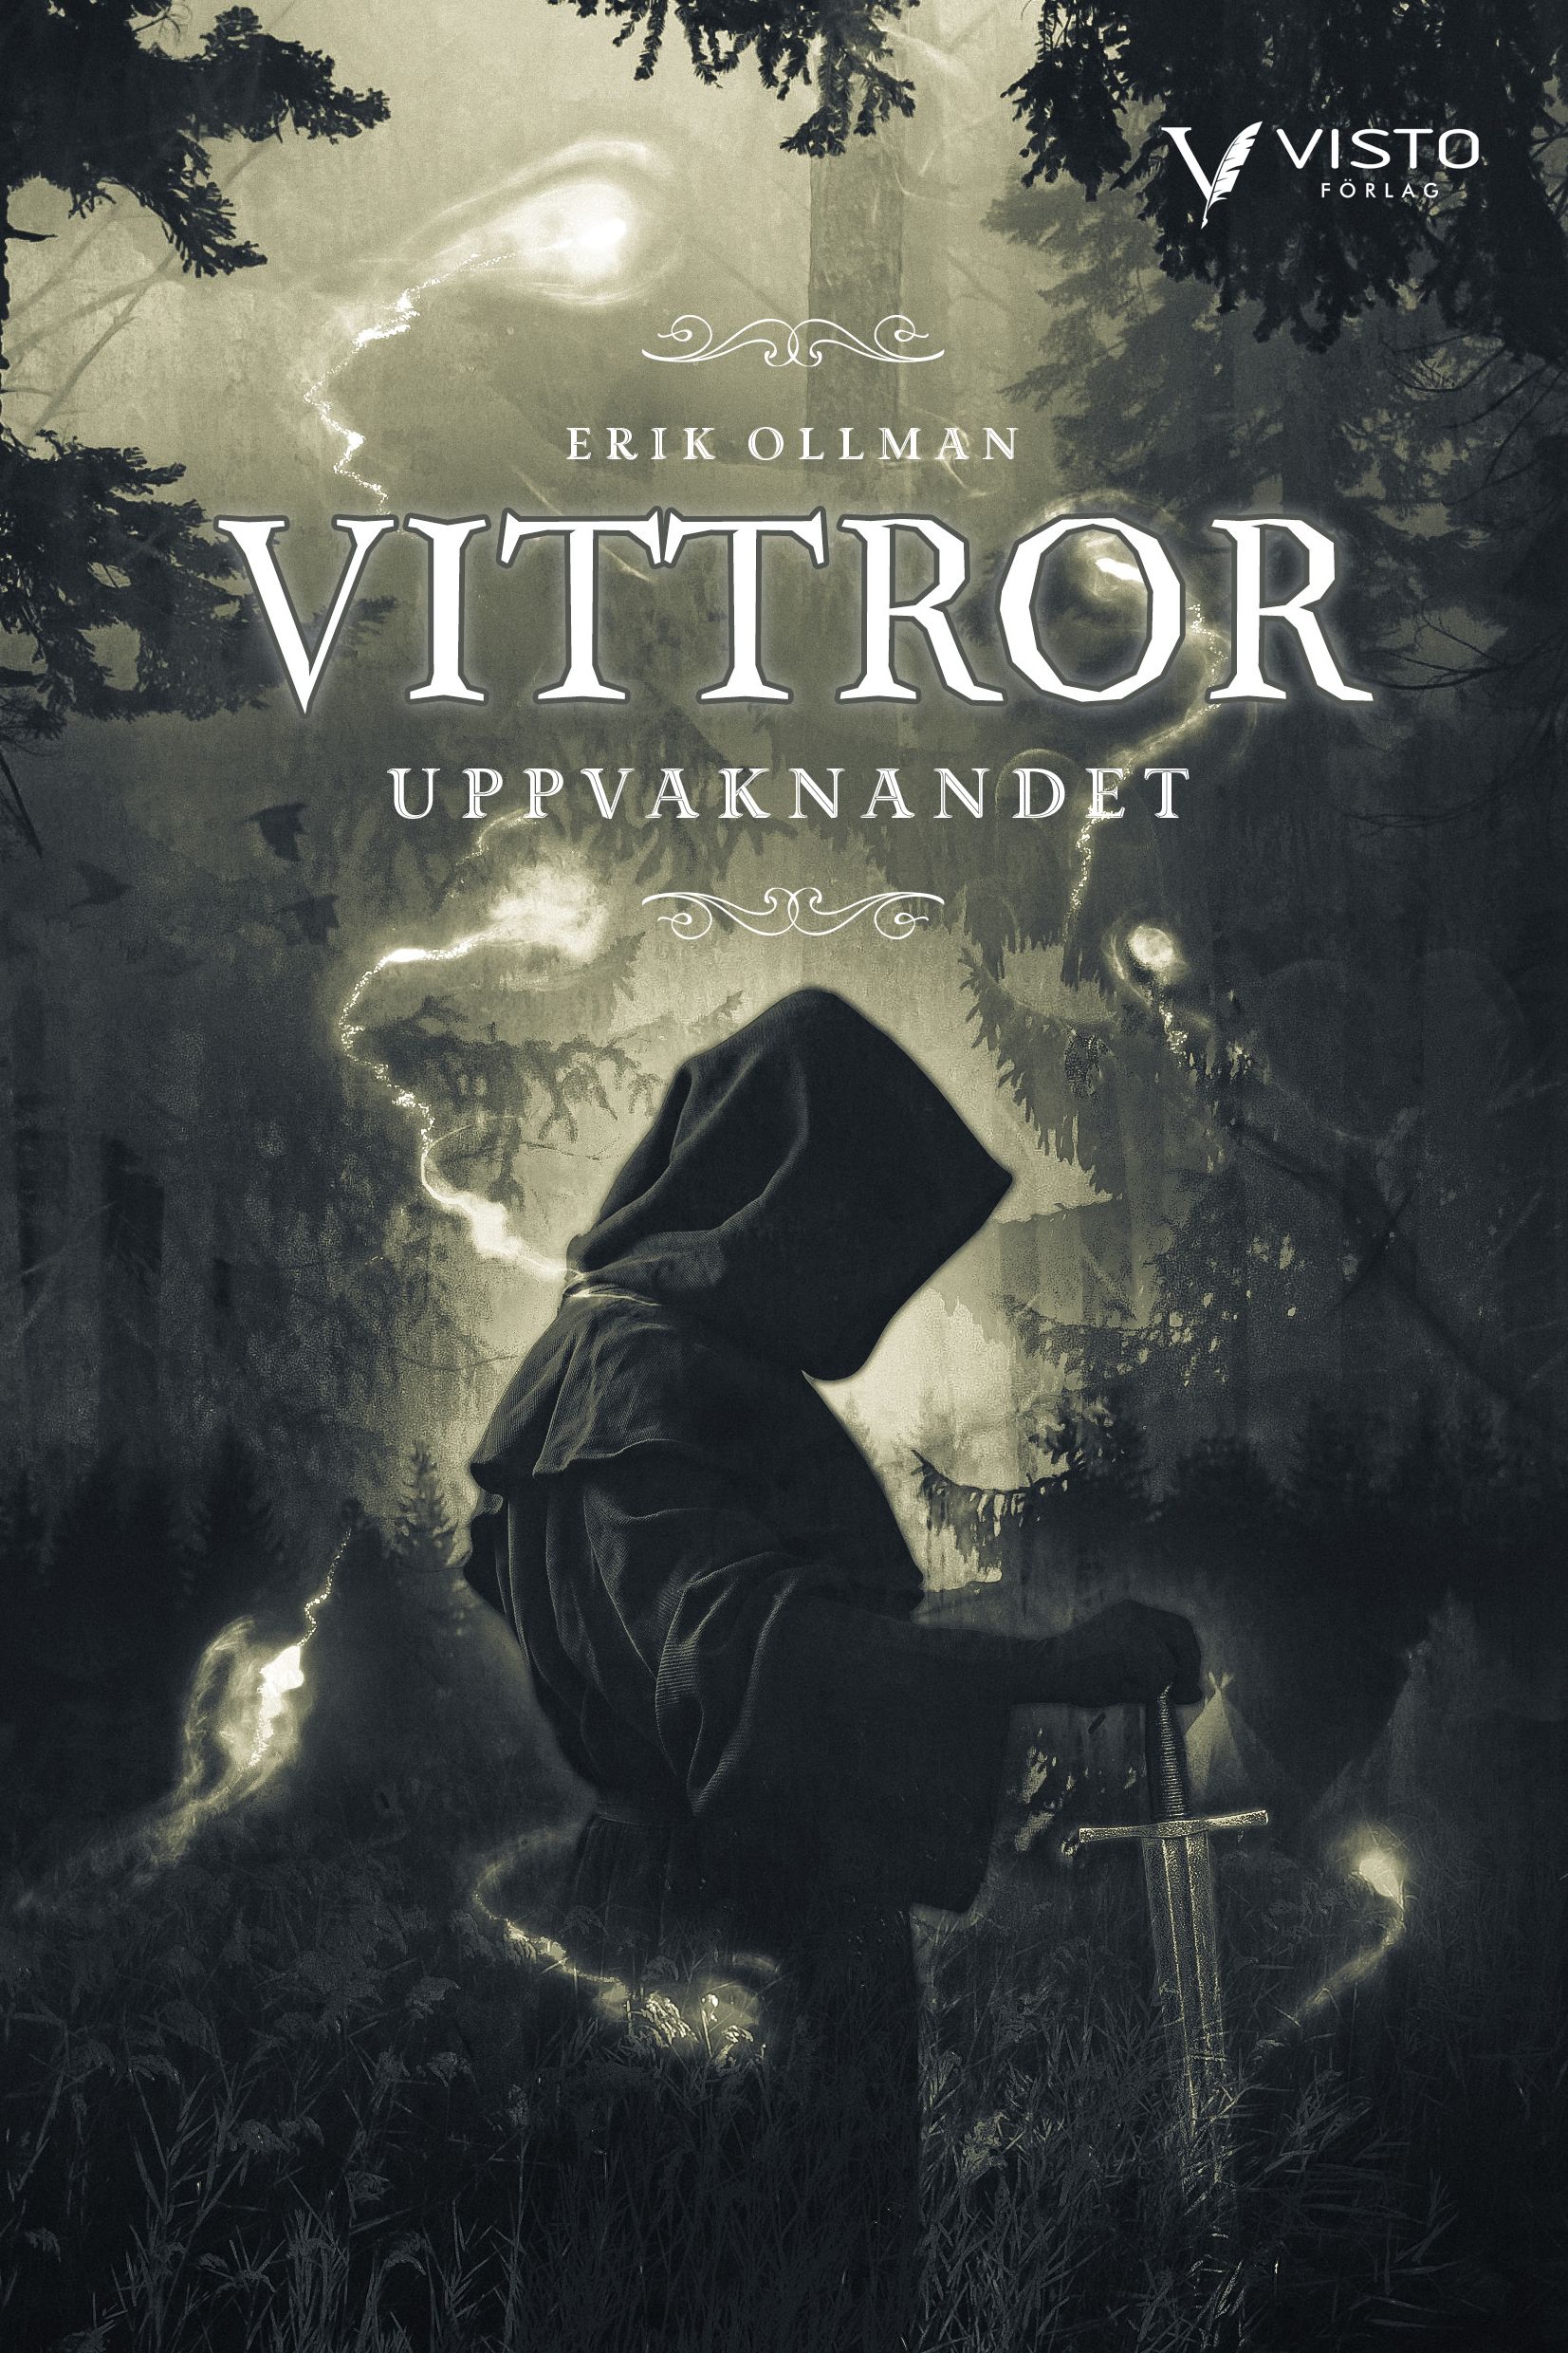 Vittror : Uppvaknandet, eBook by Erik Ollman